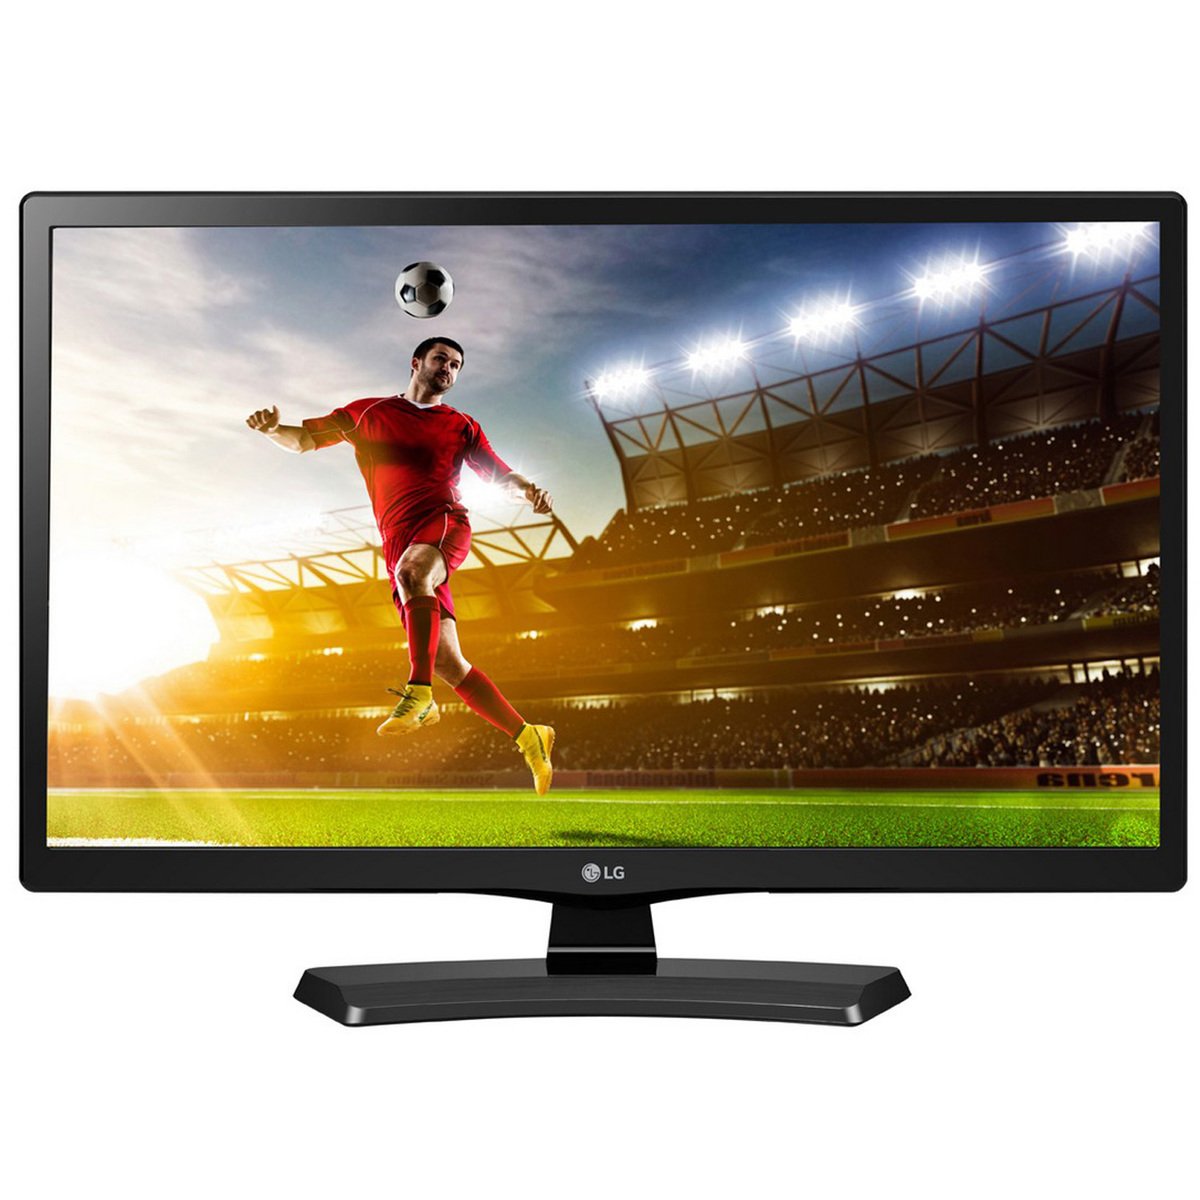 LG HD LED TV Monitor 20MT48AF 20inch